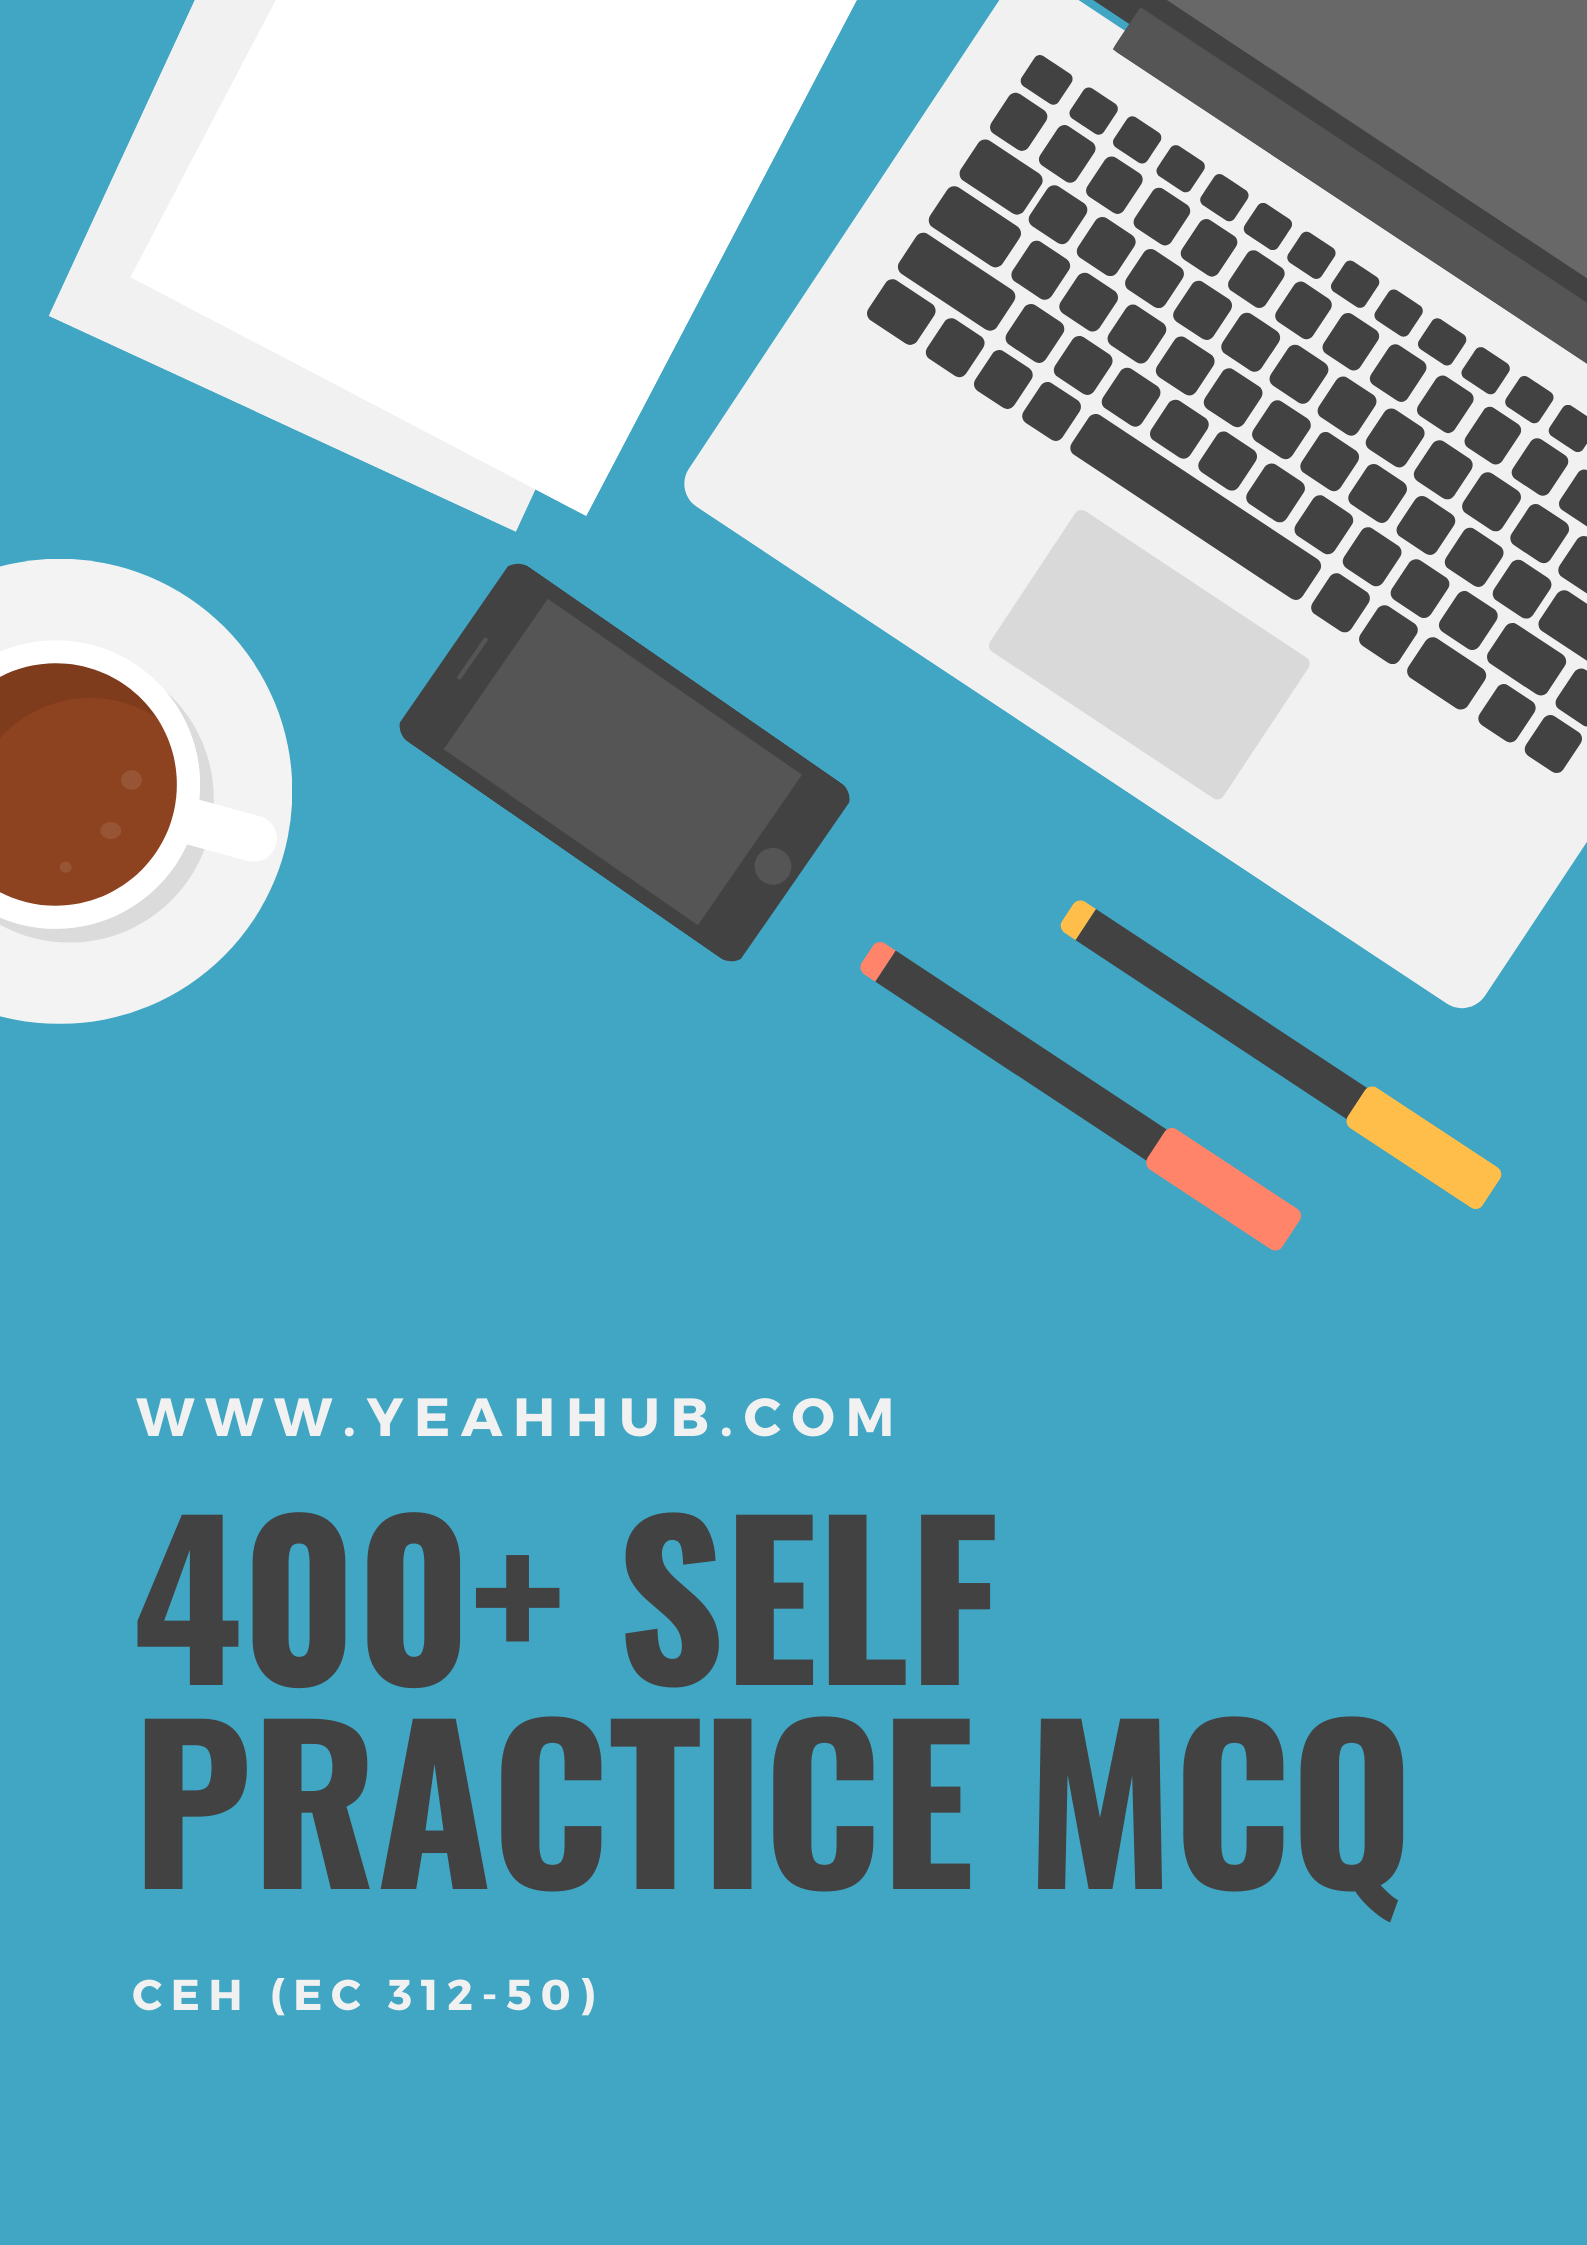 CEH Self Practice MCQ